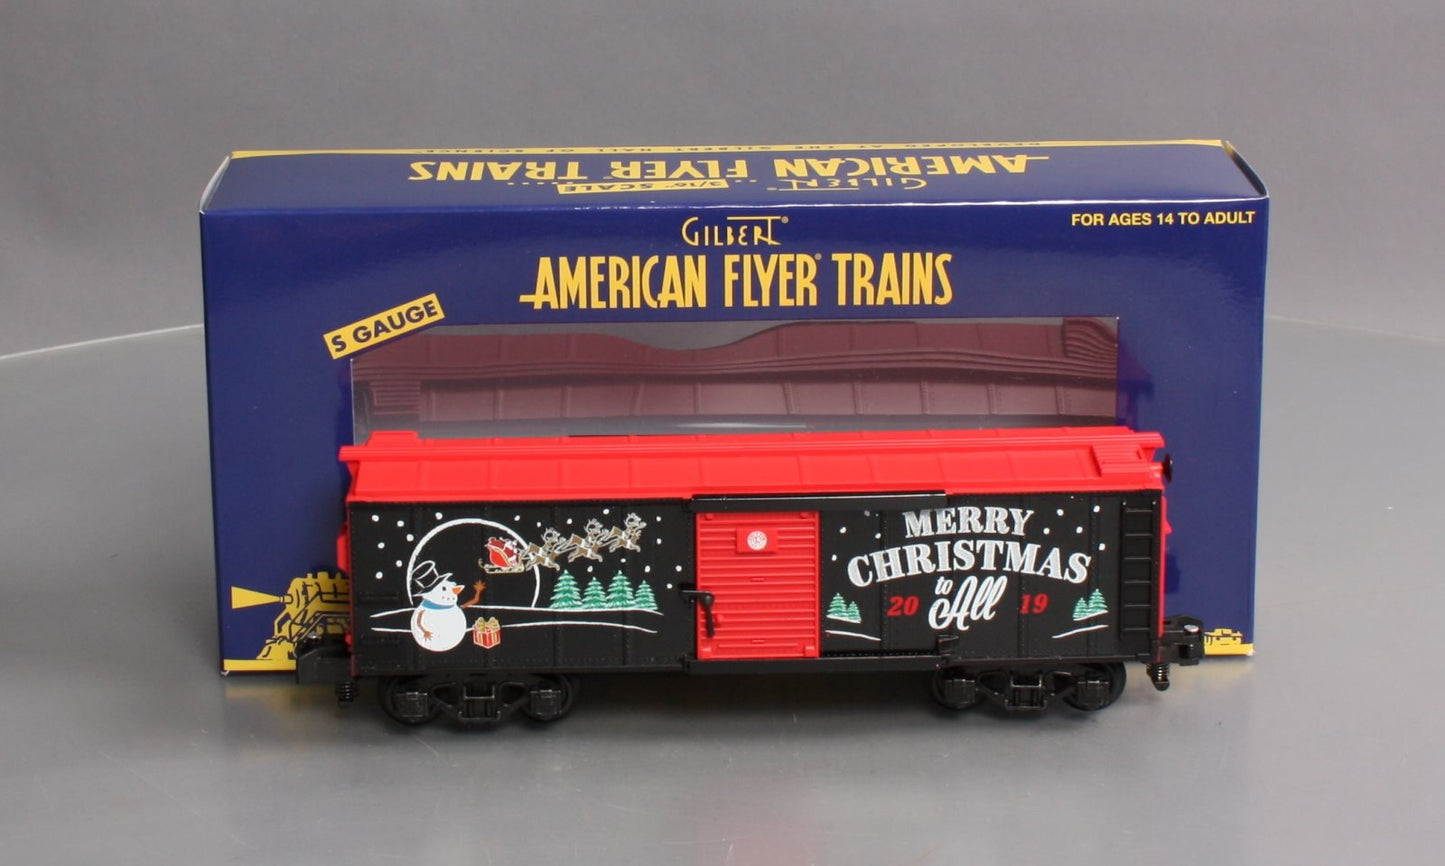 American Flyer 1919320 S 2019 Christmas Boxcar